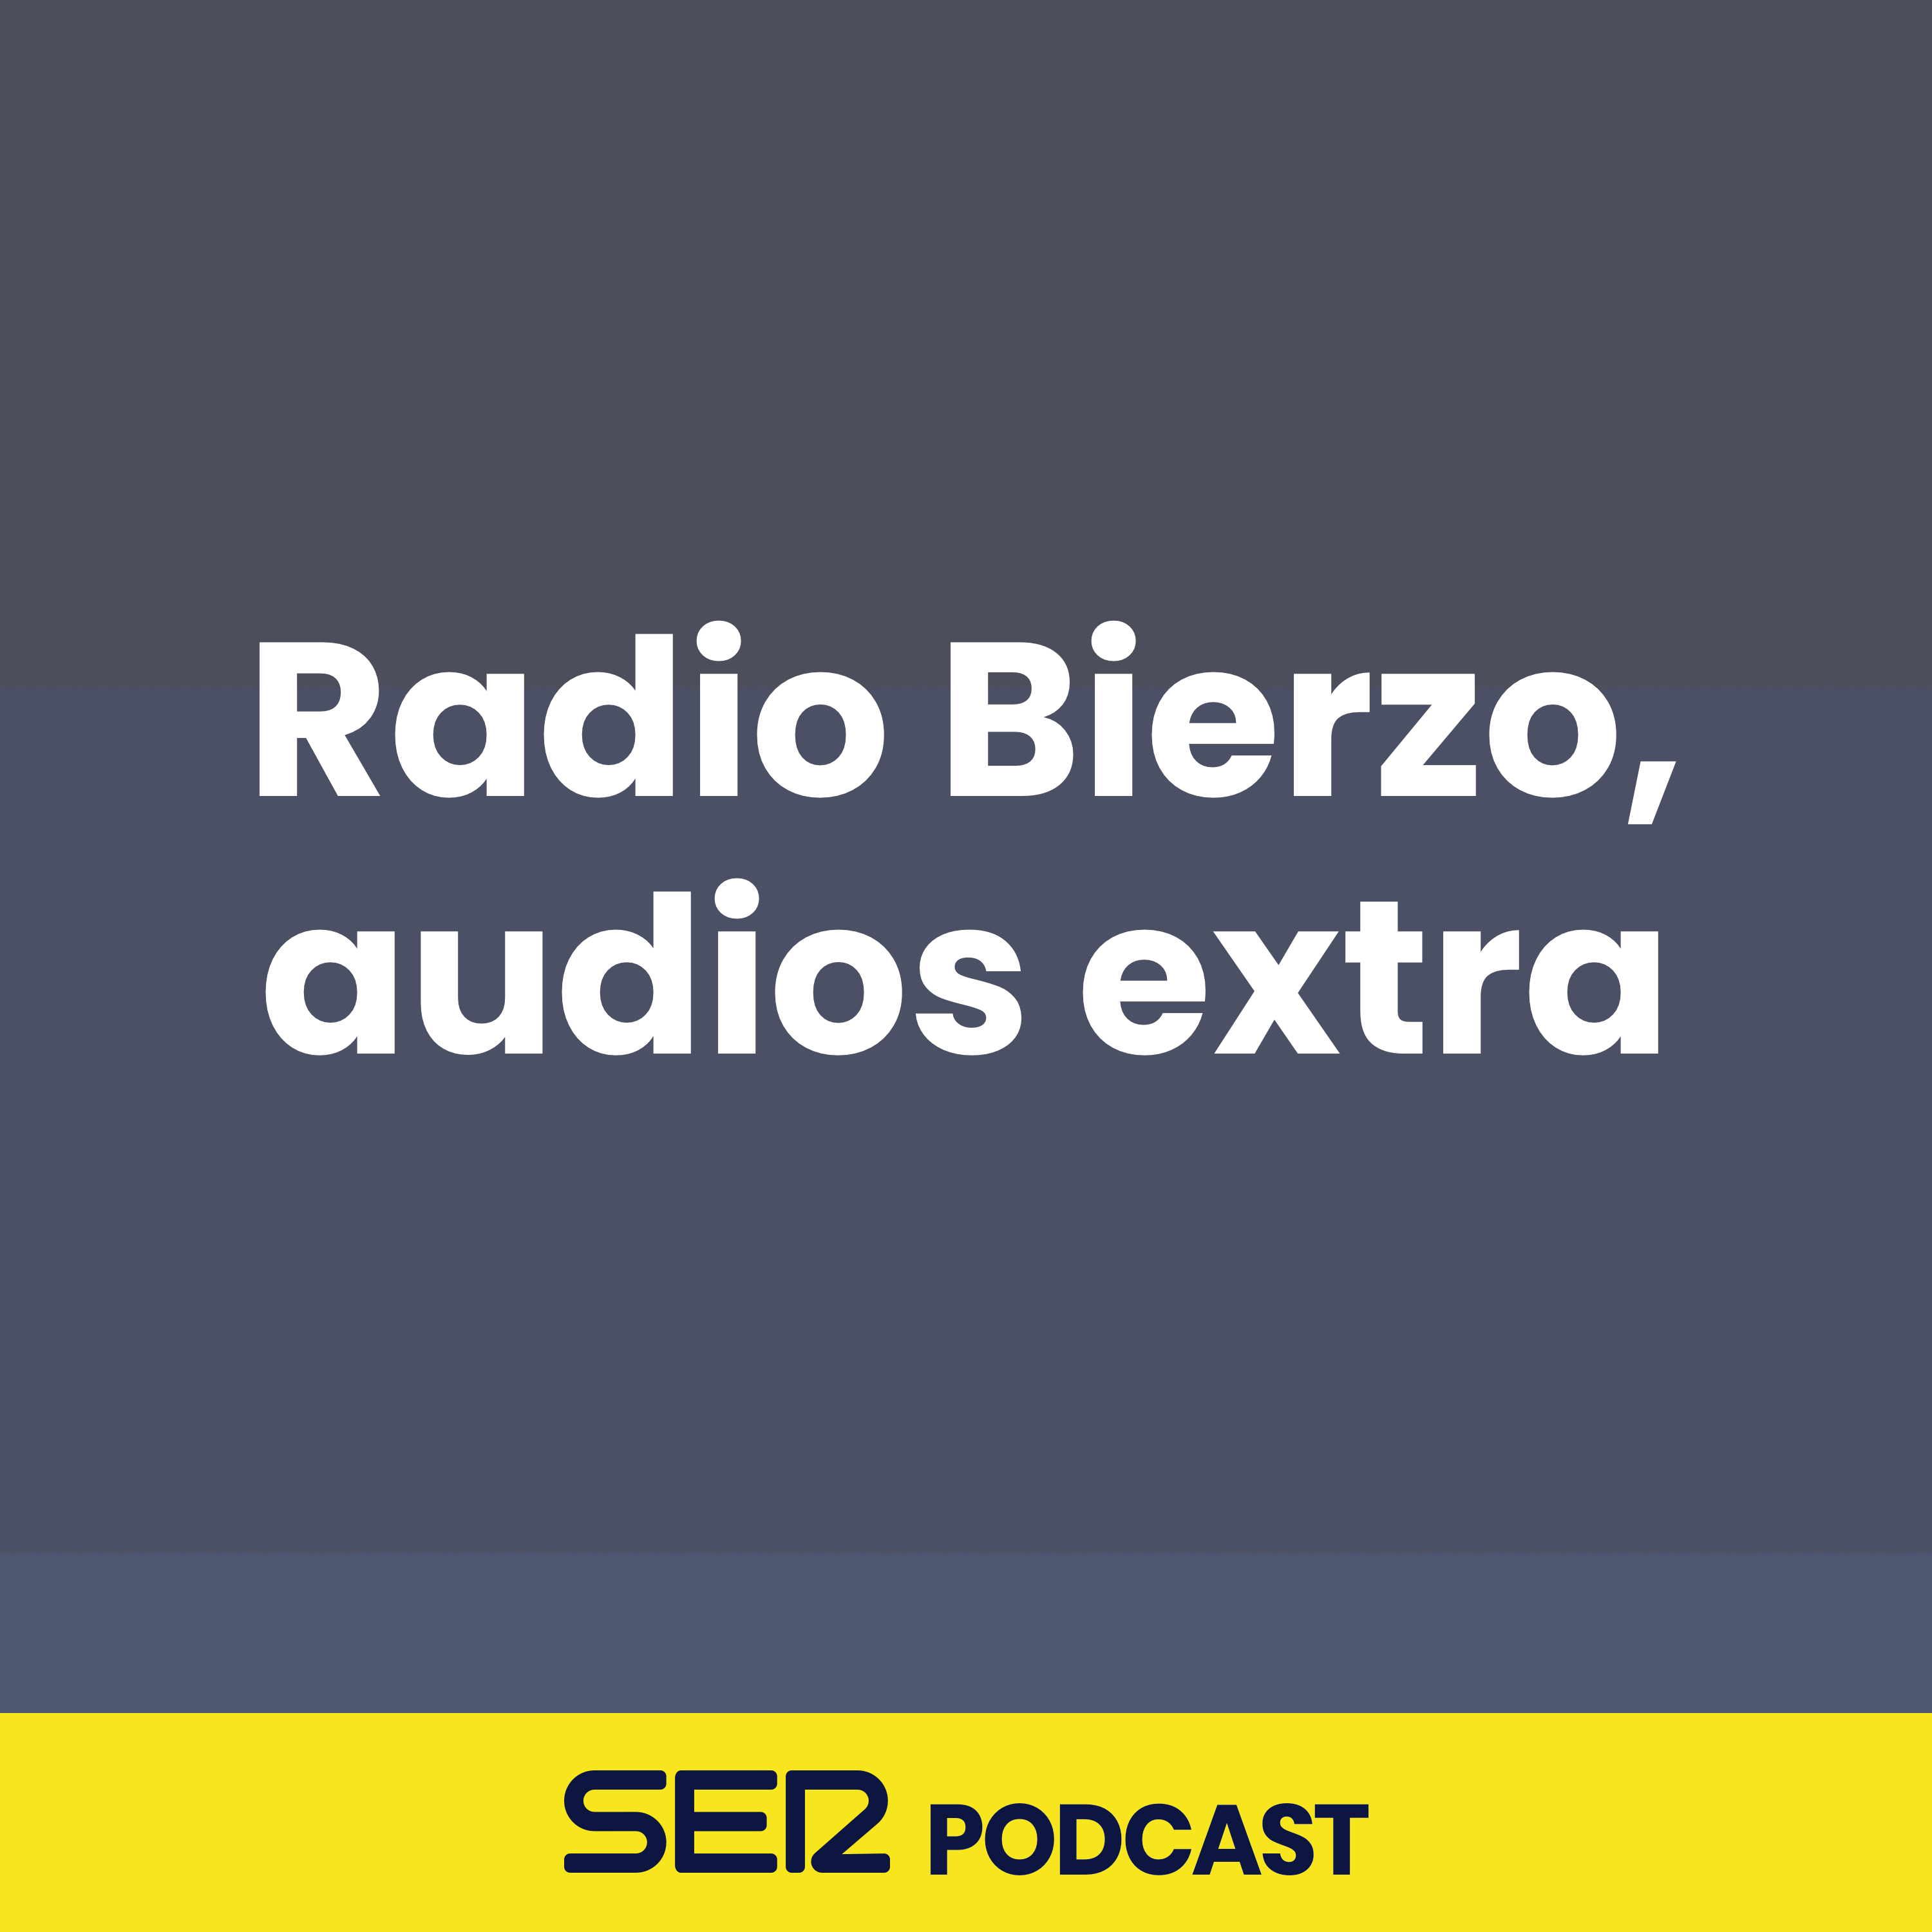 Radio Bierzo, audios extra